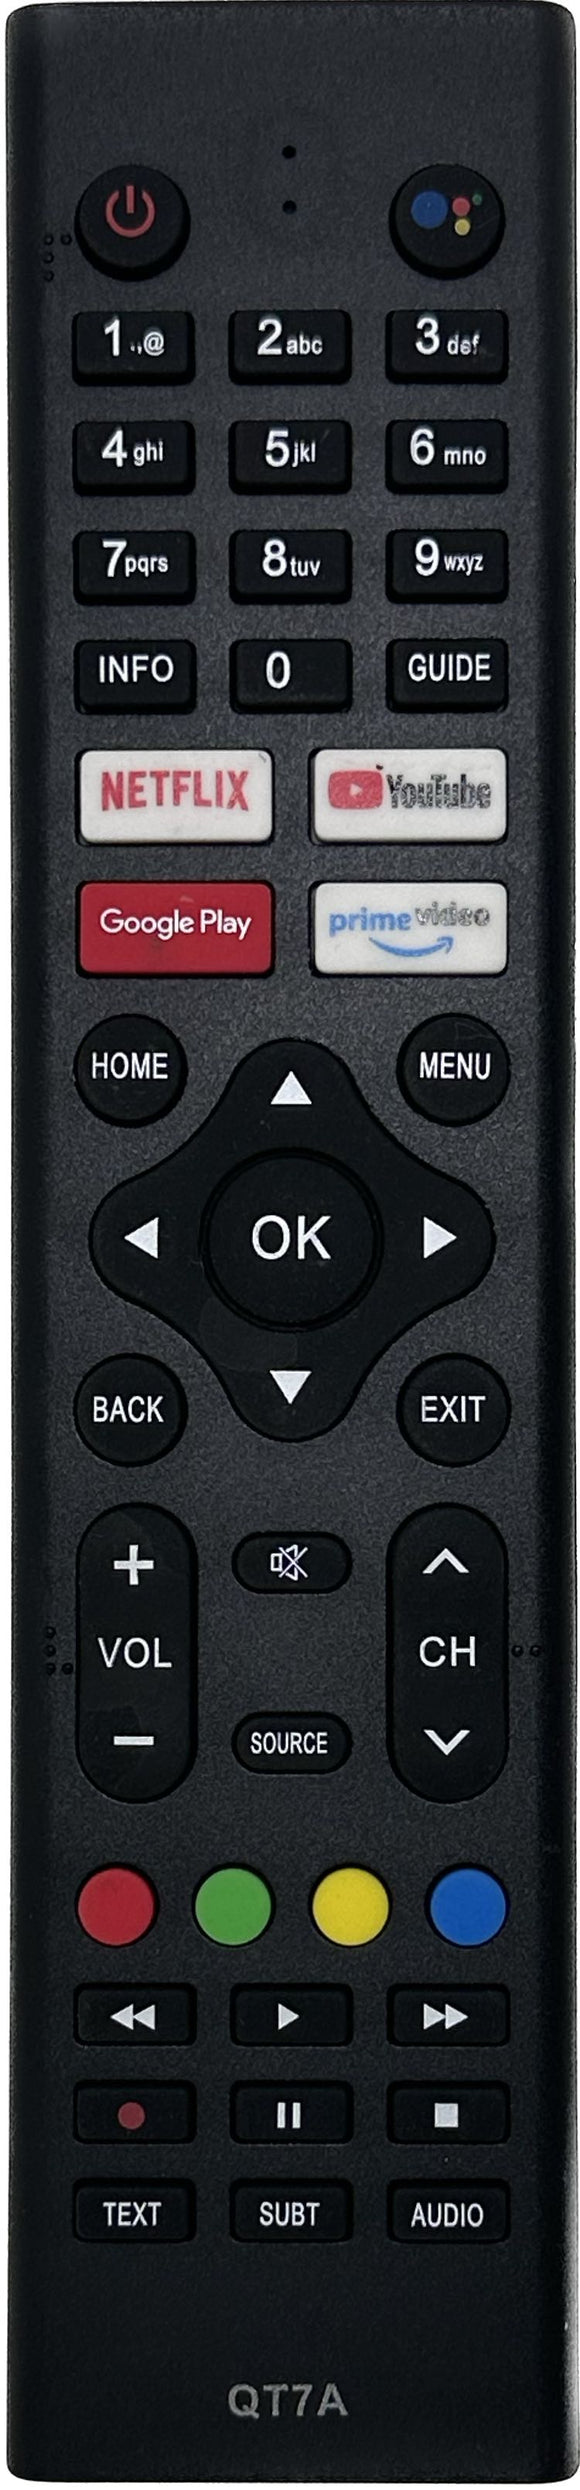 Soniq G32HW60A Smart Android TV Replacement Remote Control